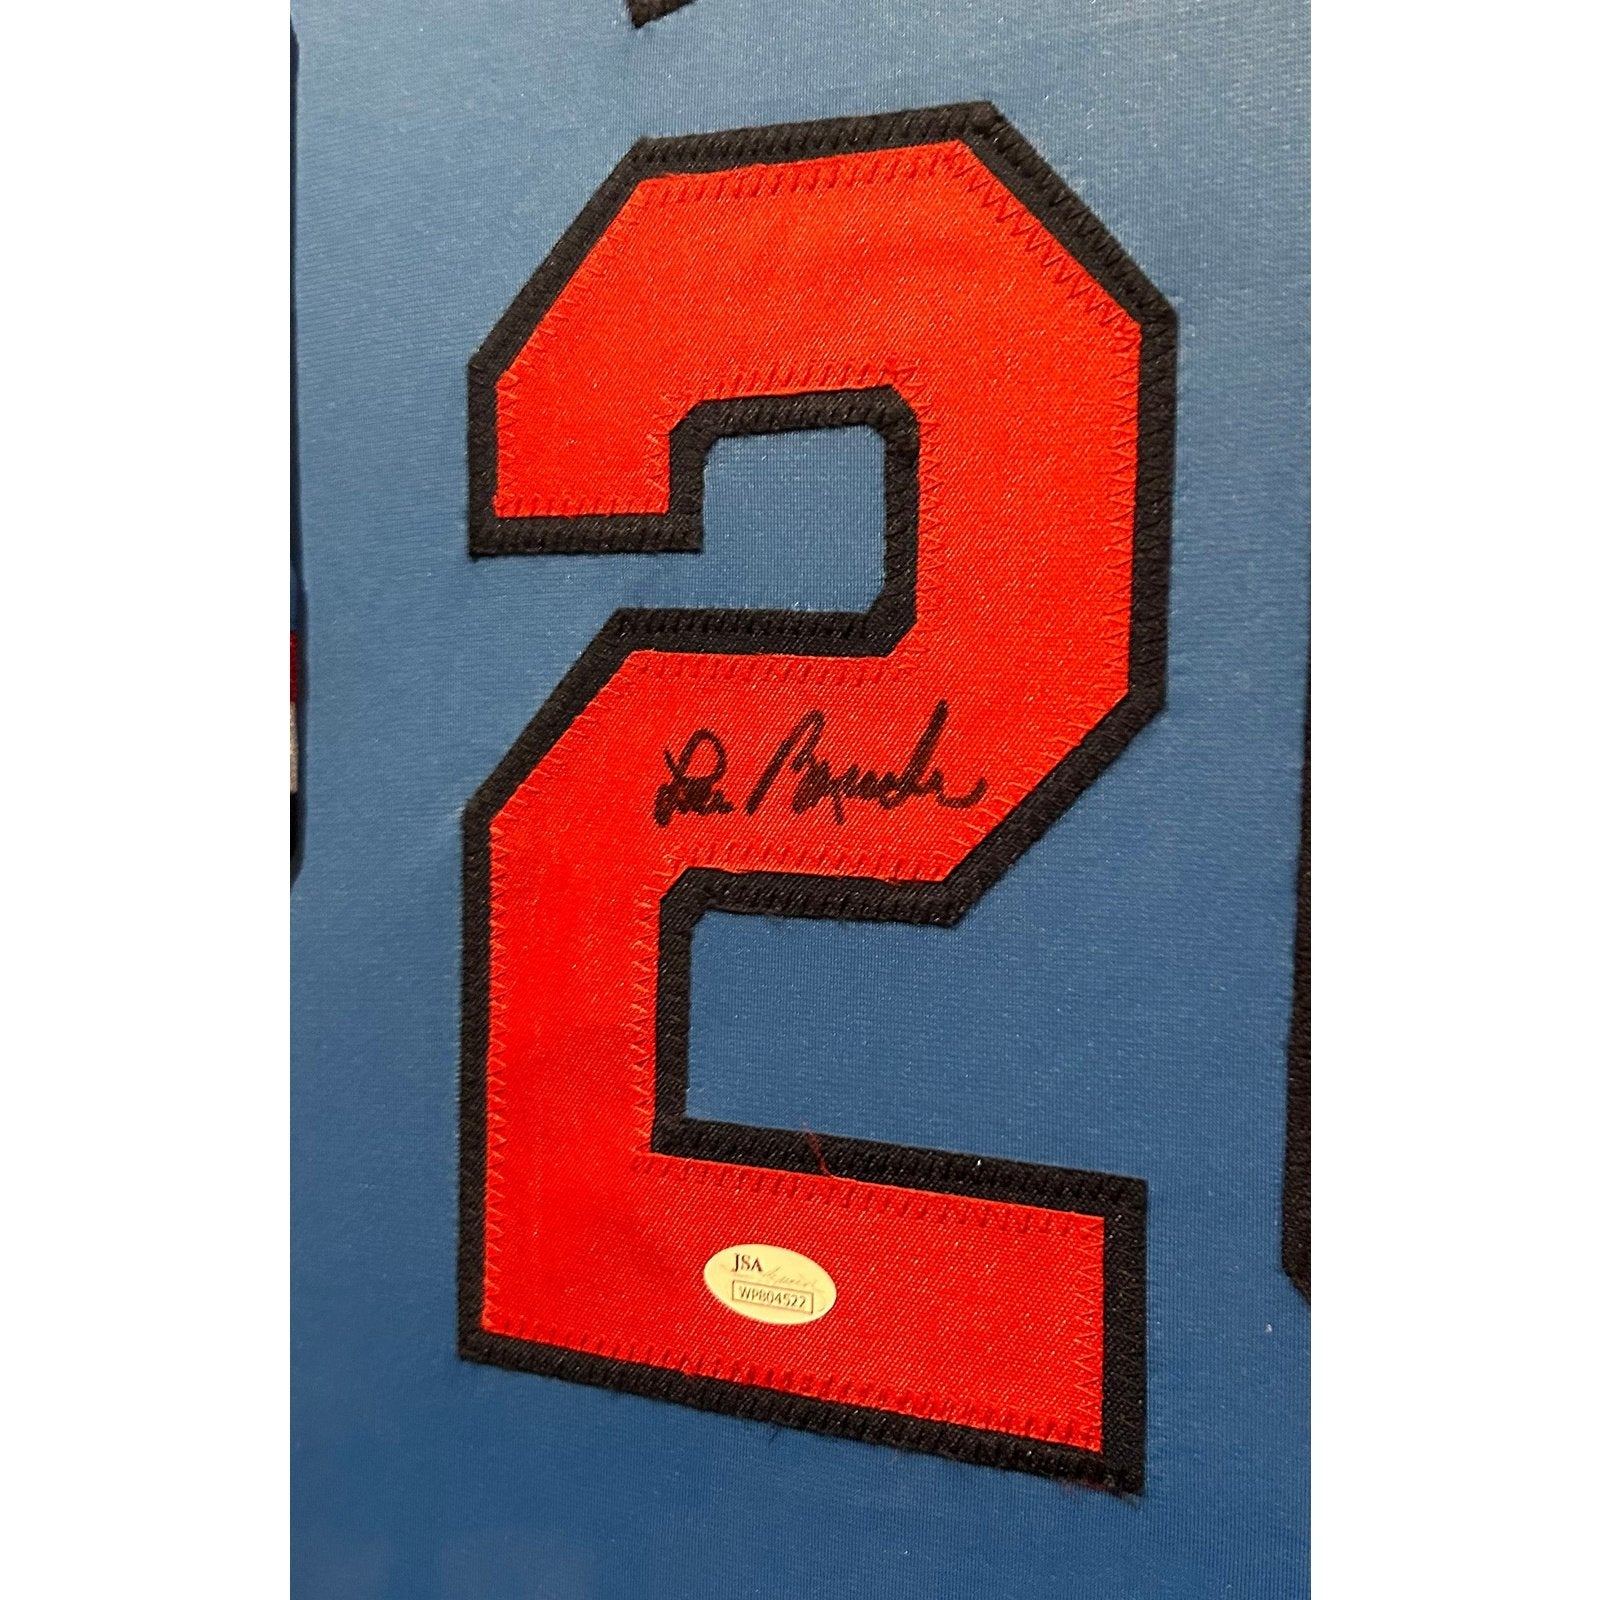 Lou Brock Signed Framed Blue Jersey JSA Autographed St. Louis Cardinal